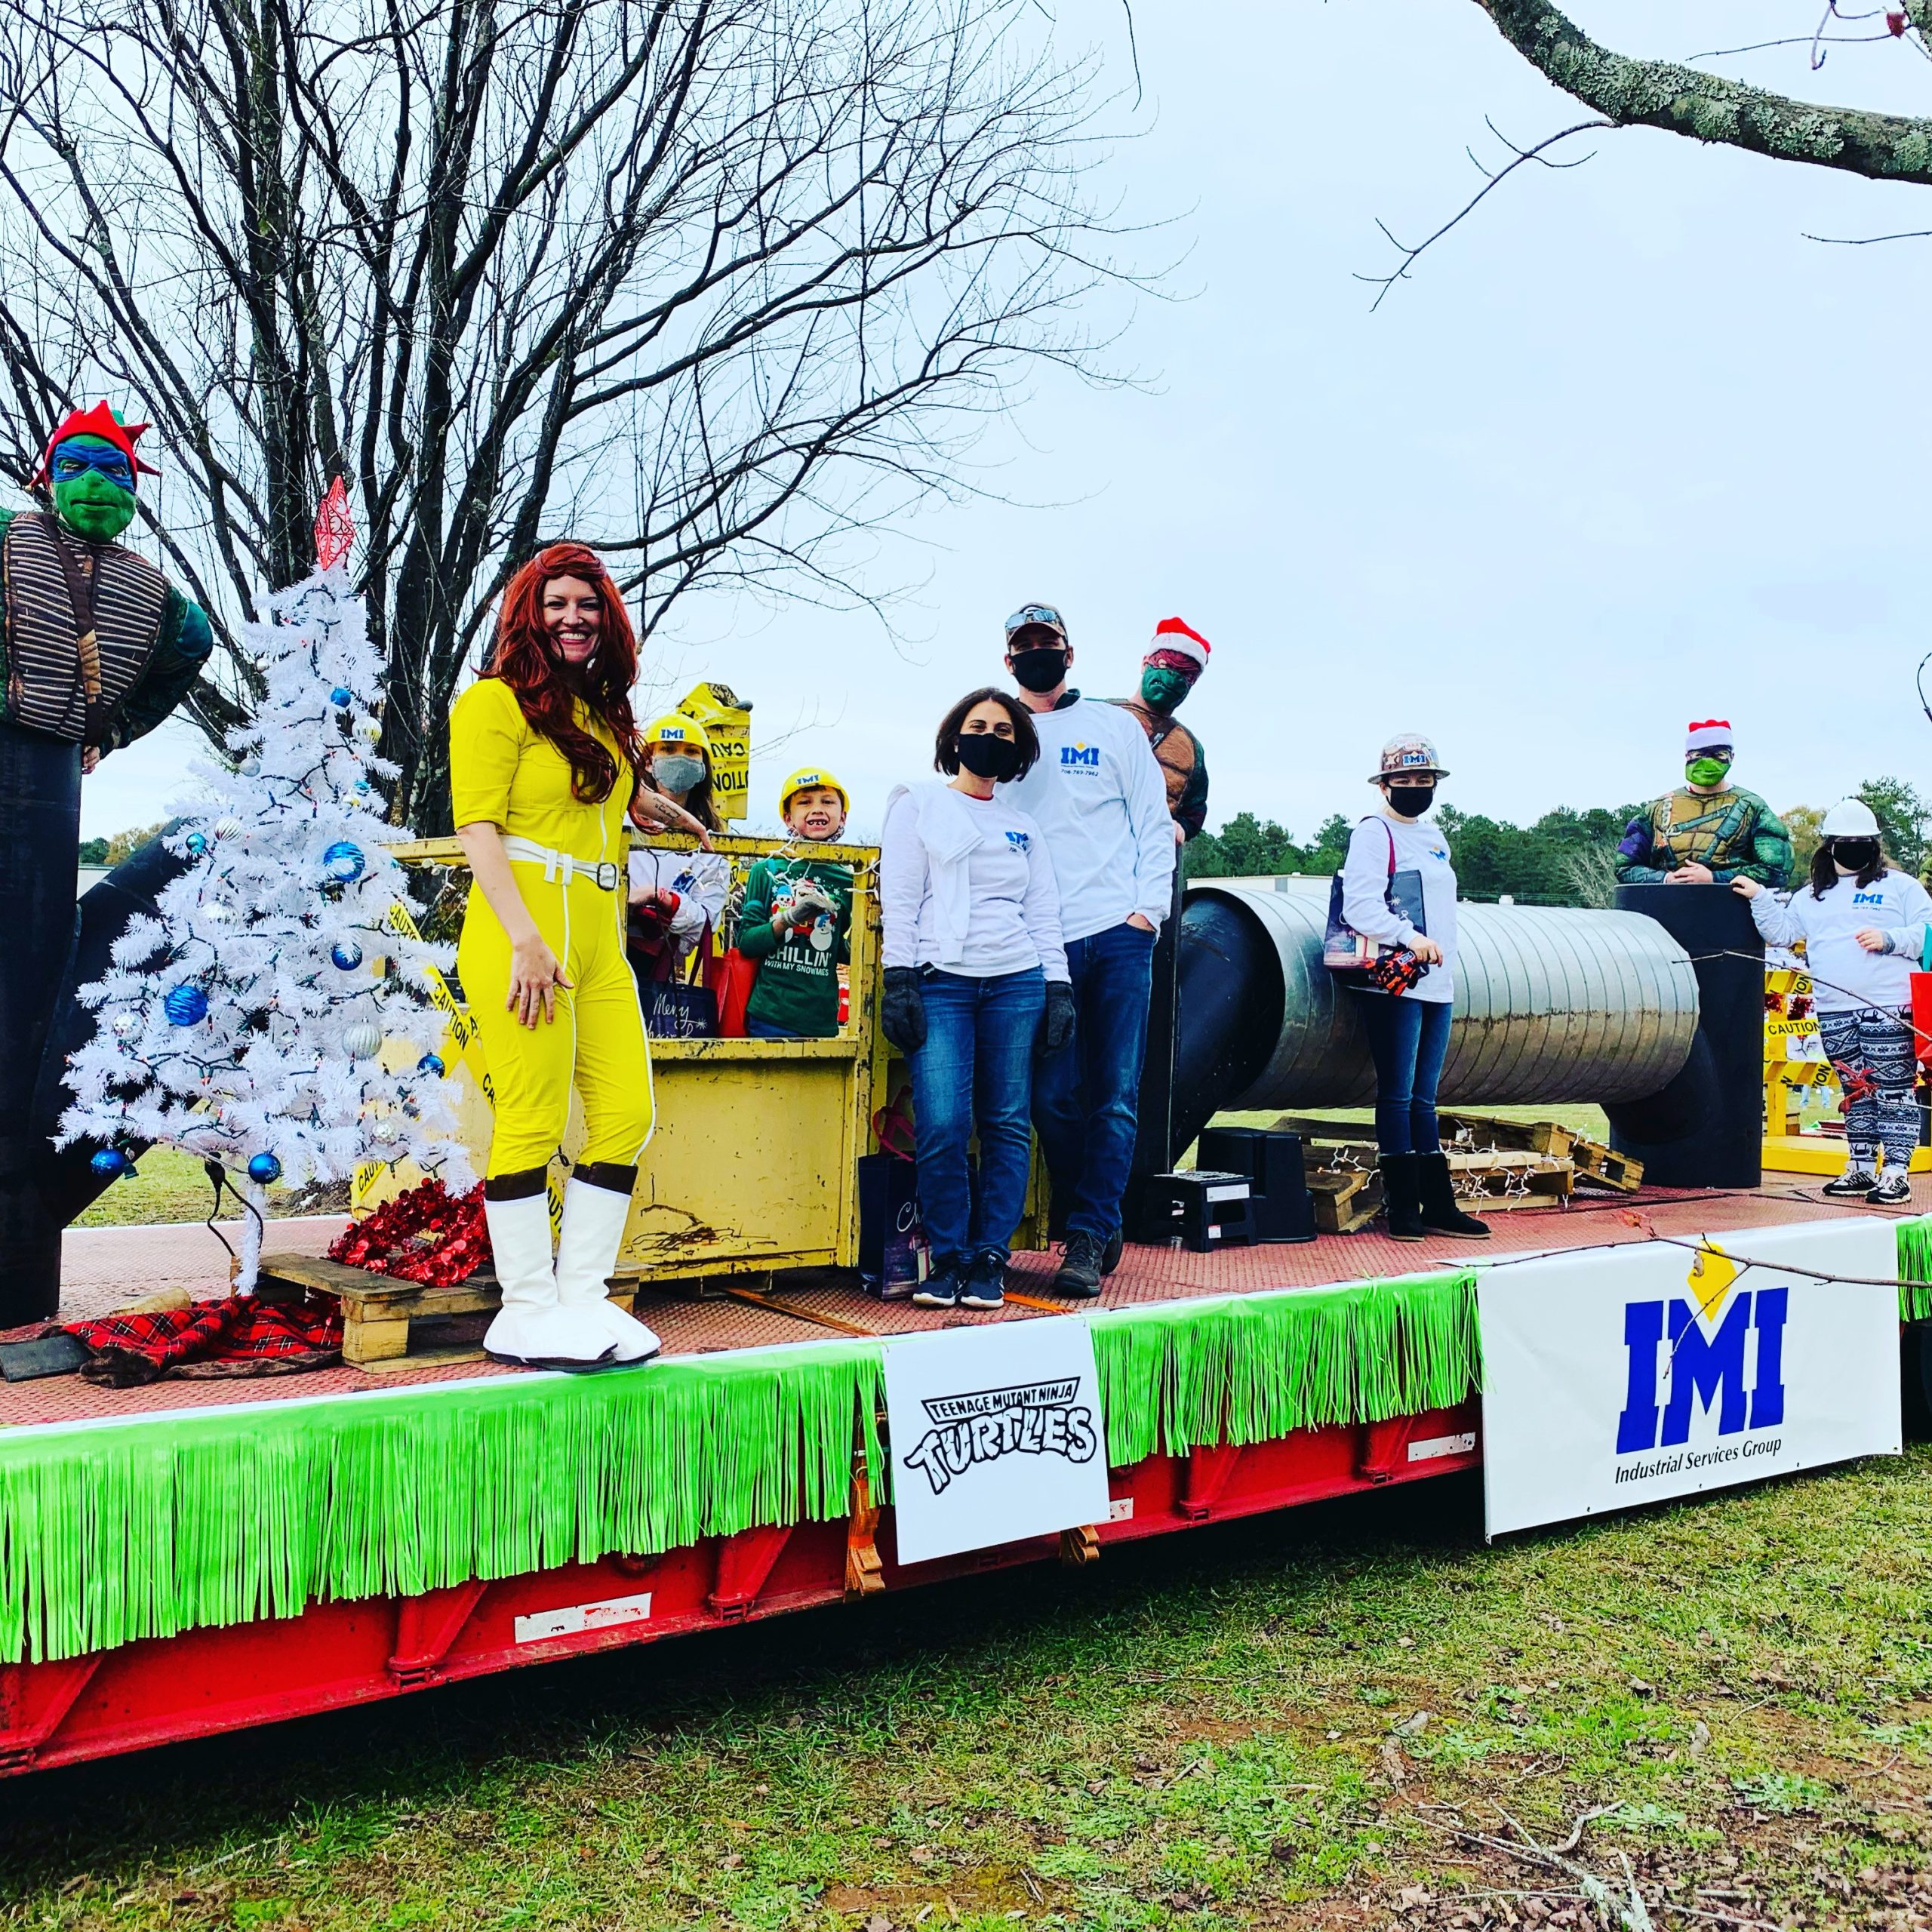 IMI 2020 Christmas Parade Float